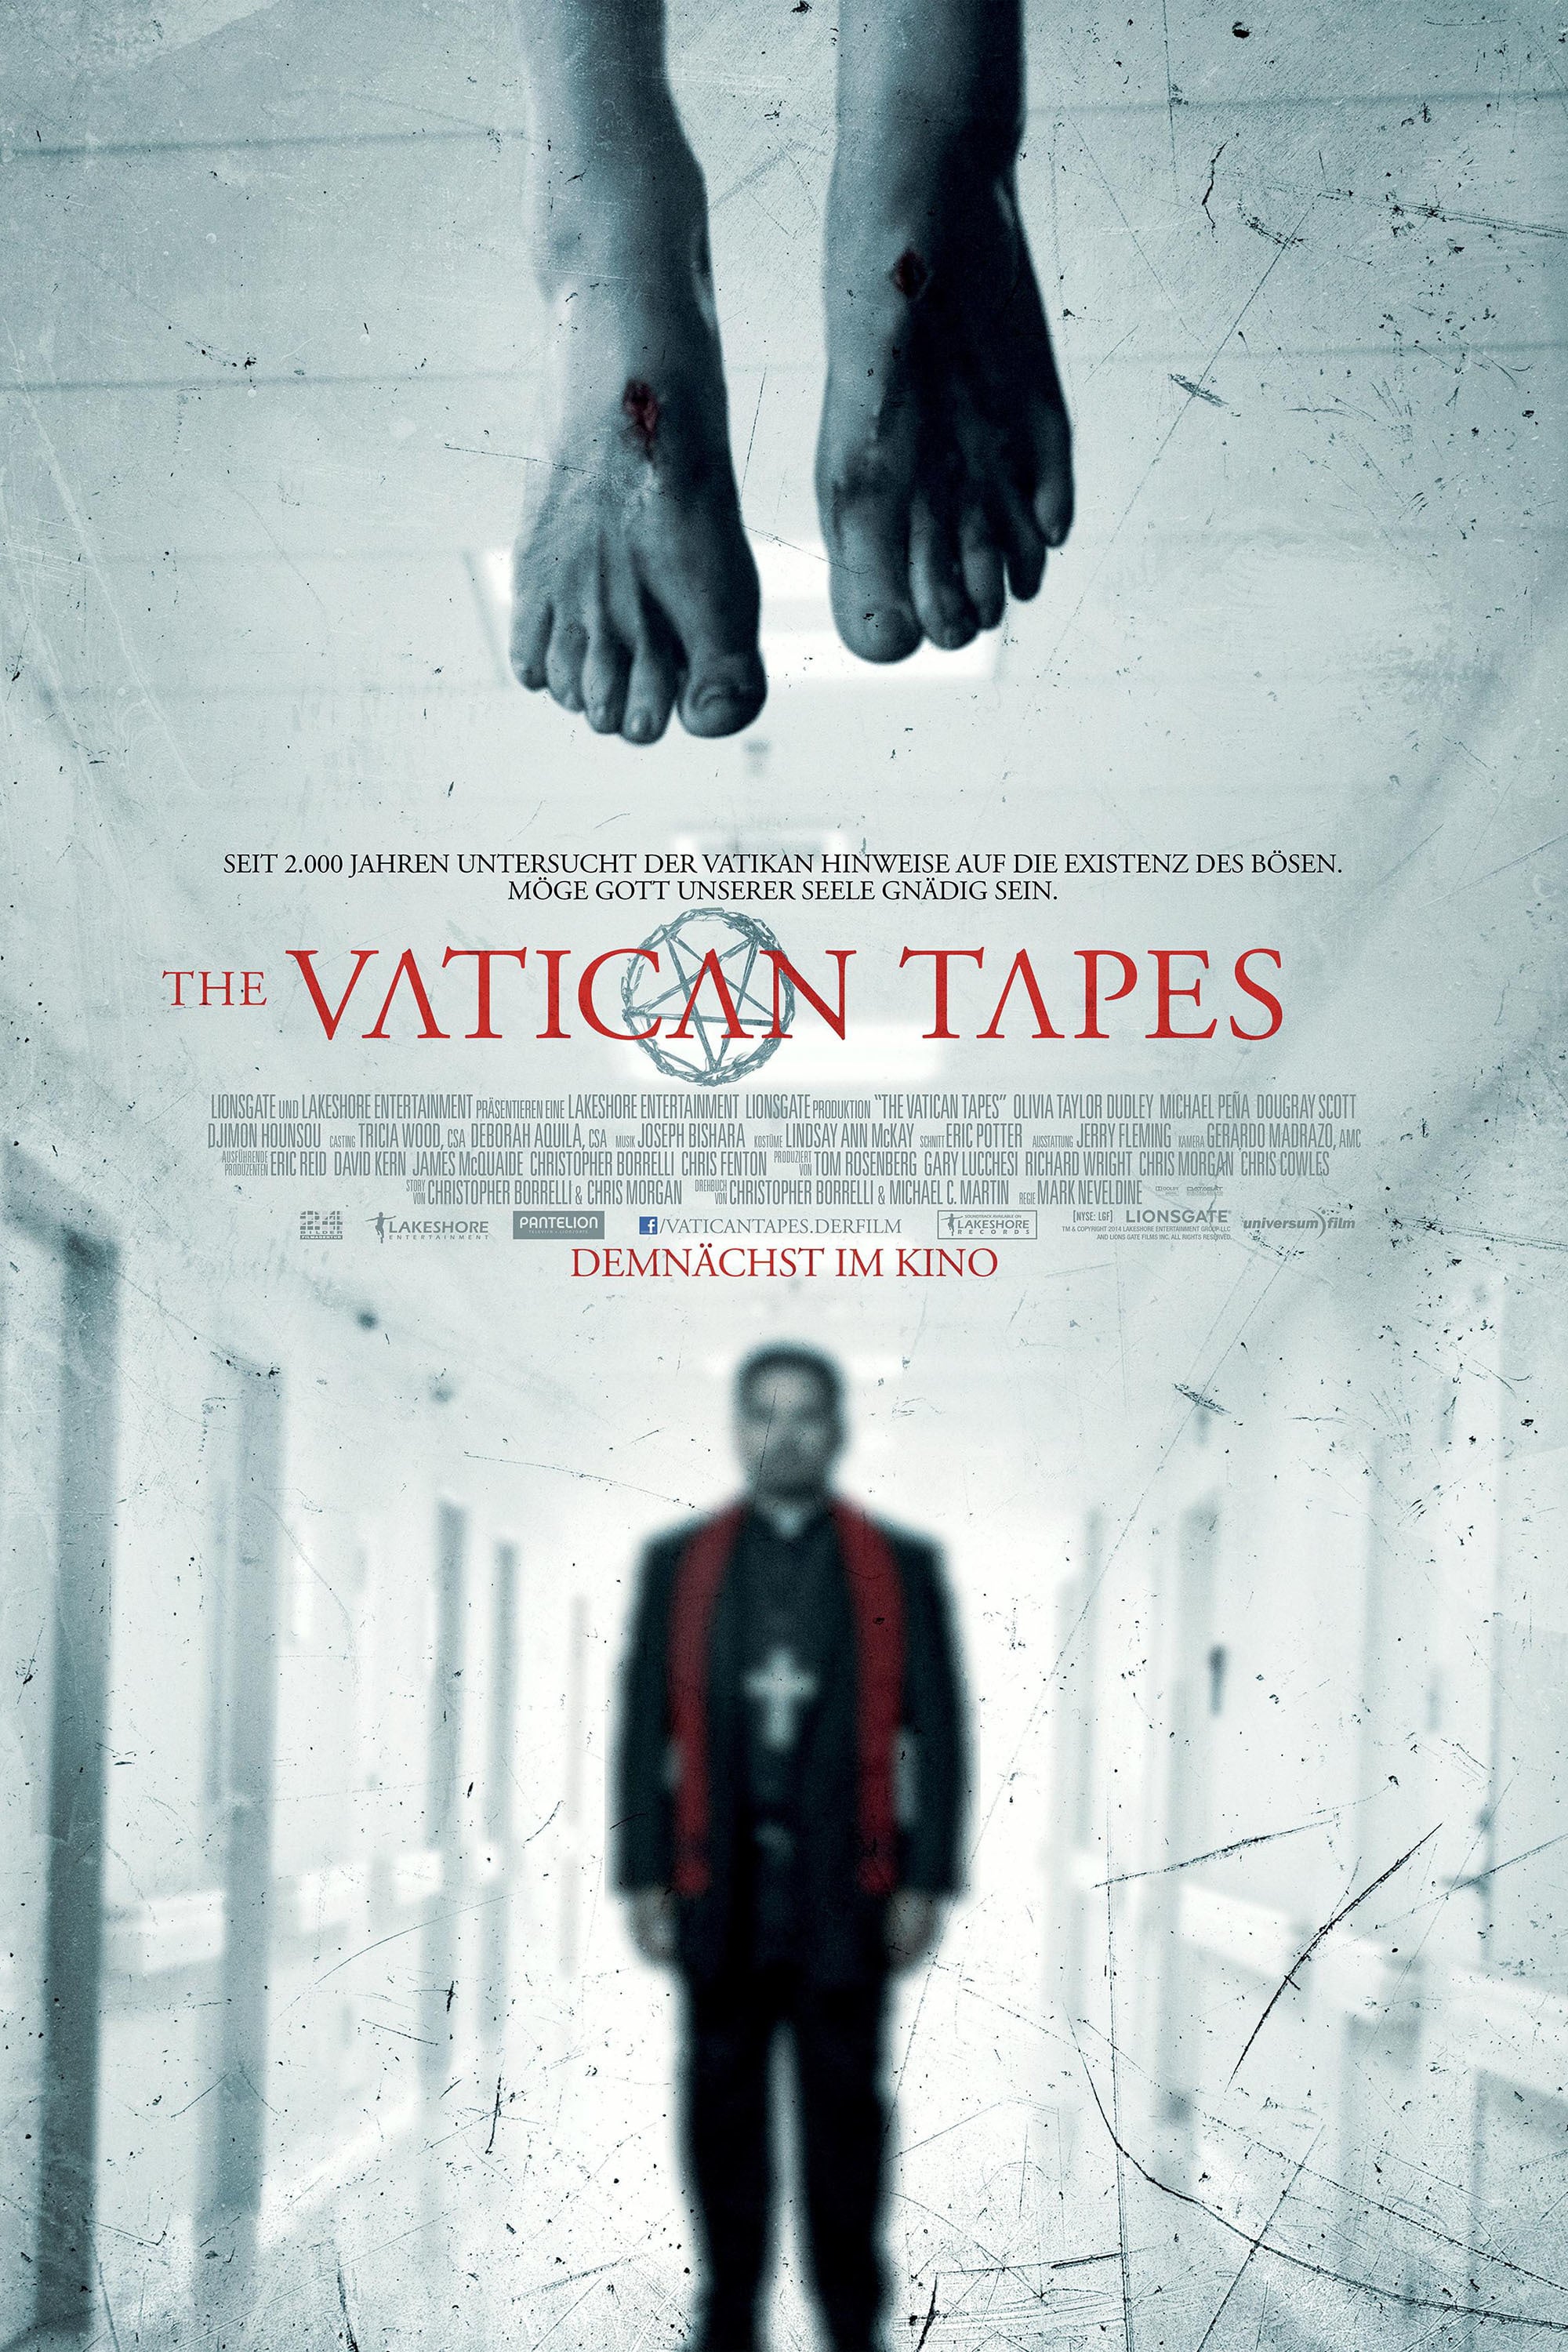 Plakat von "The Vatican Tapes"